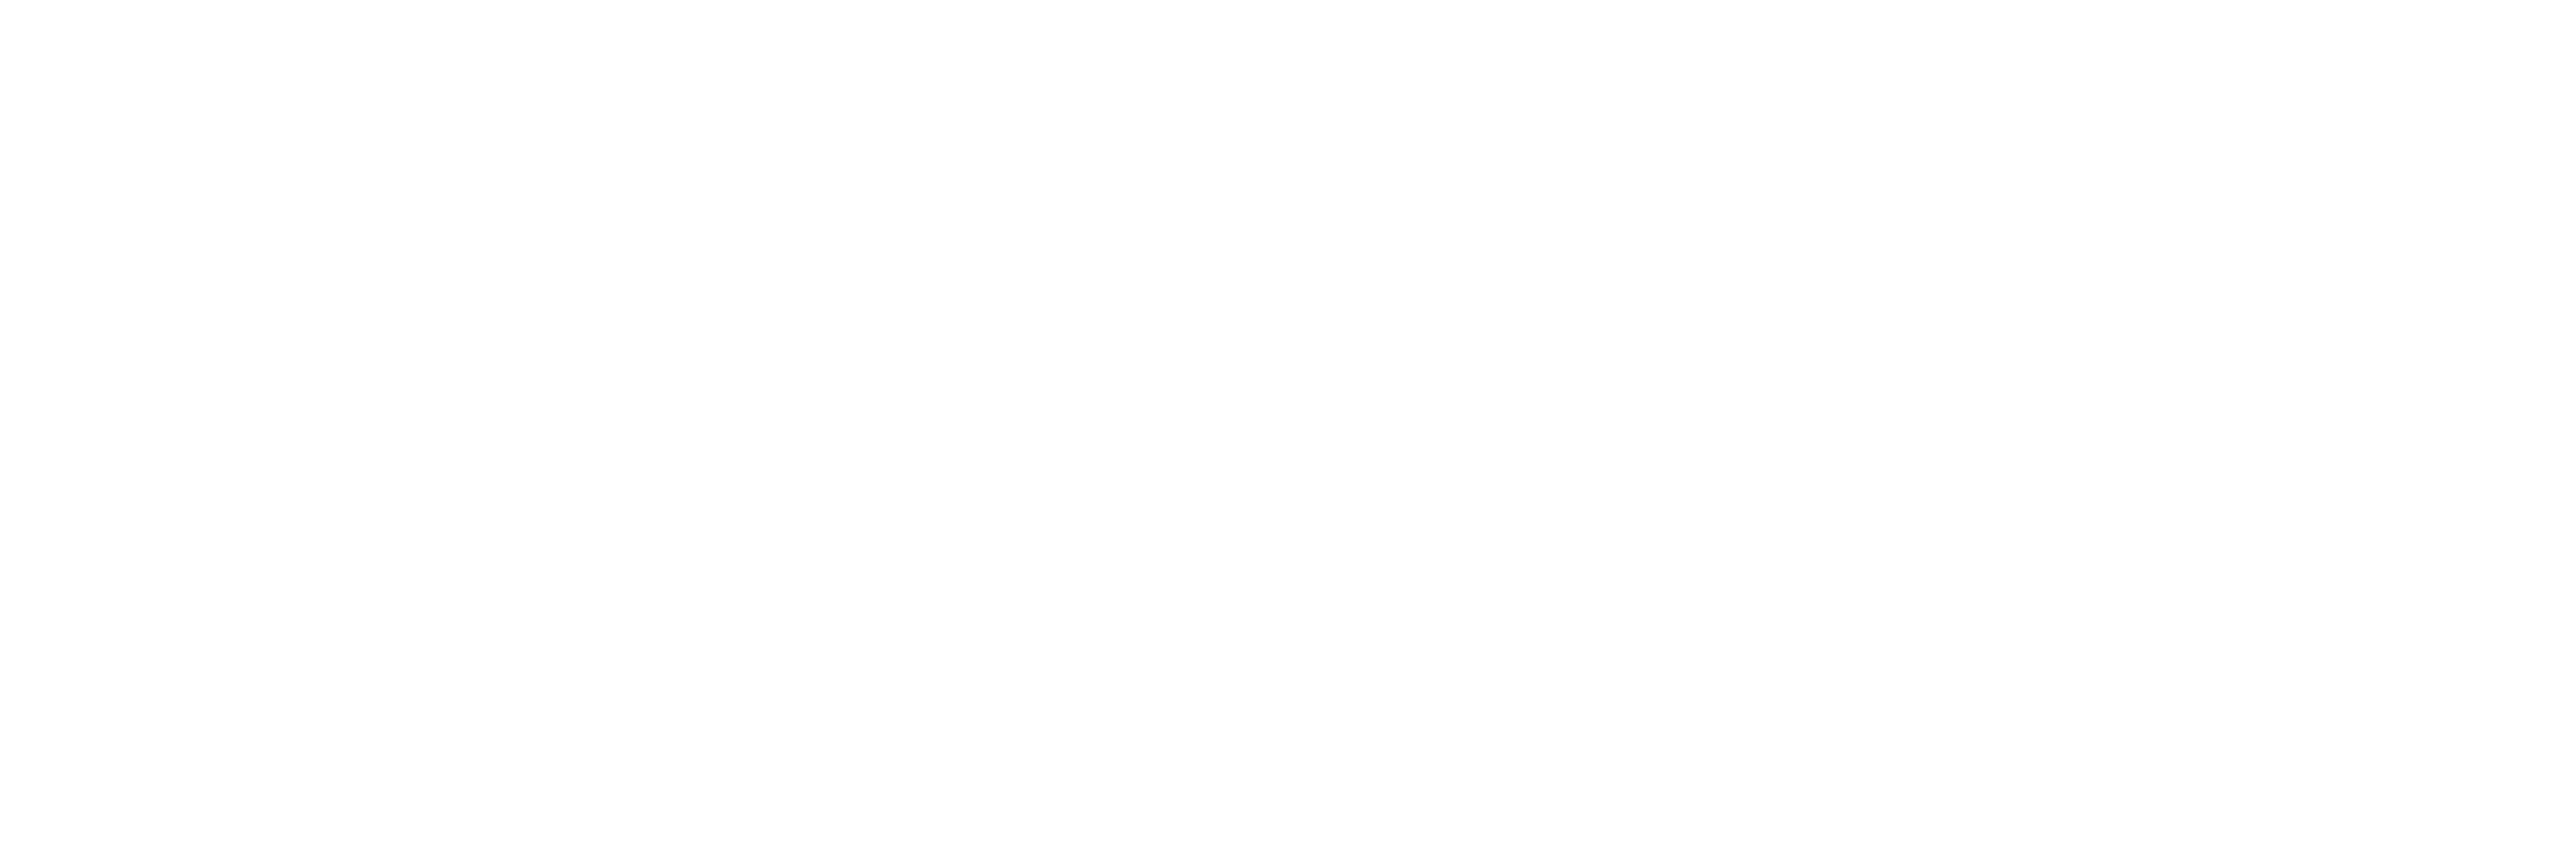 google-white-logo